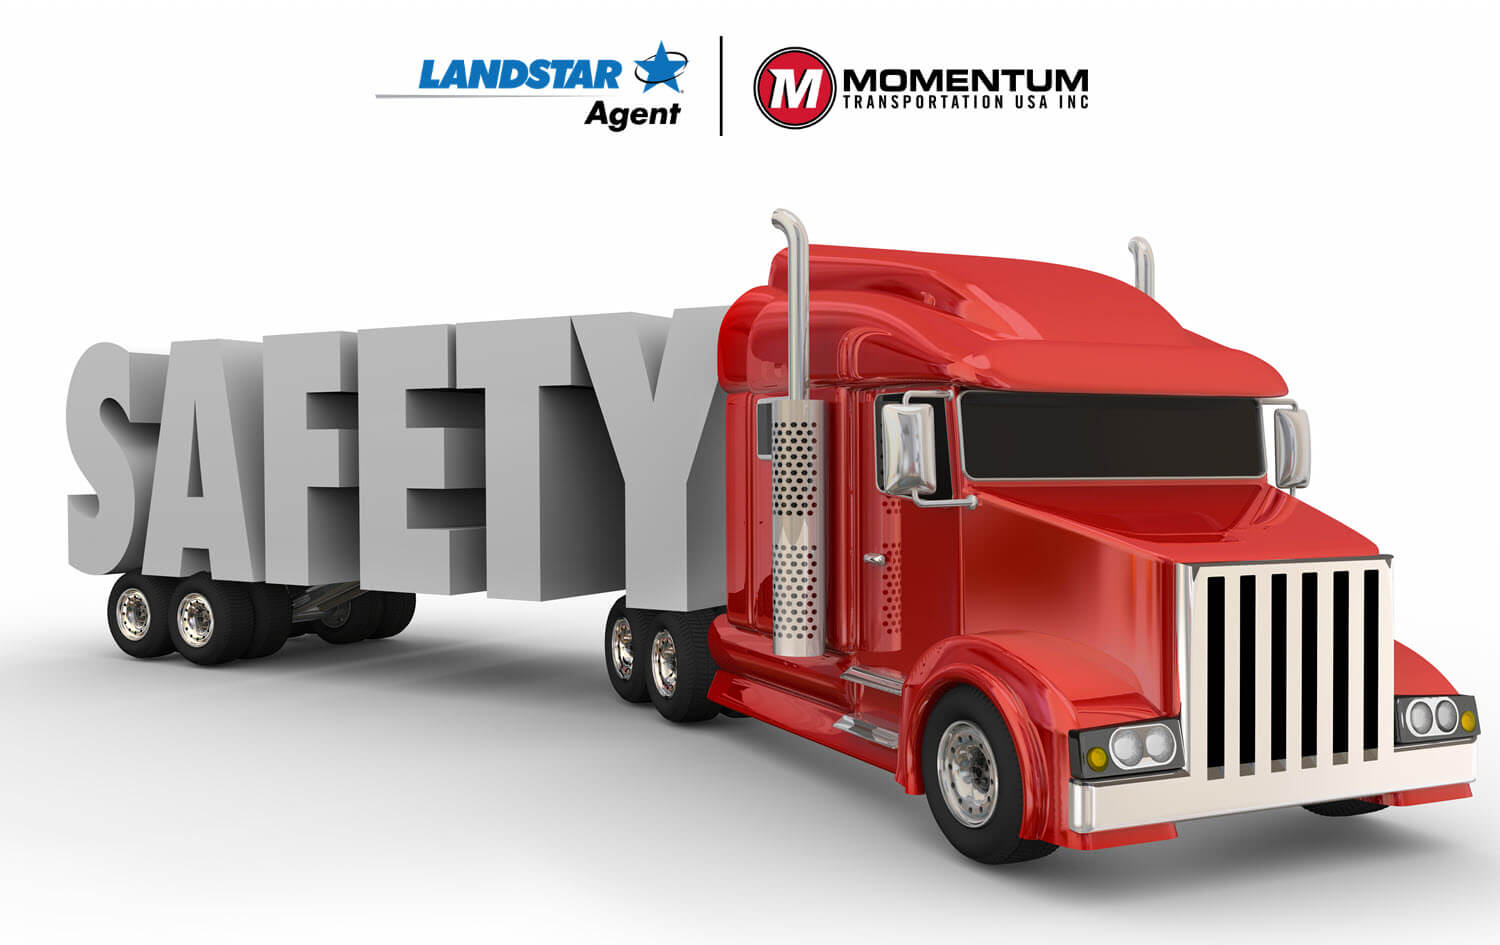 Momentum Transportation: Leadership Among the Safest Trucking Companies